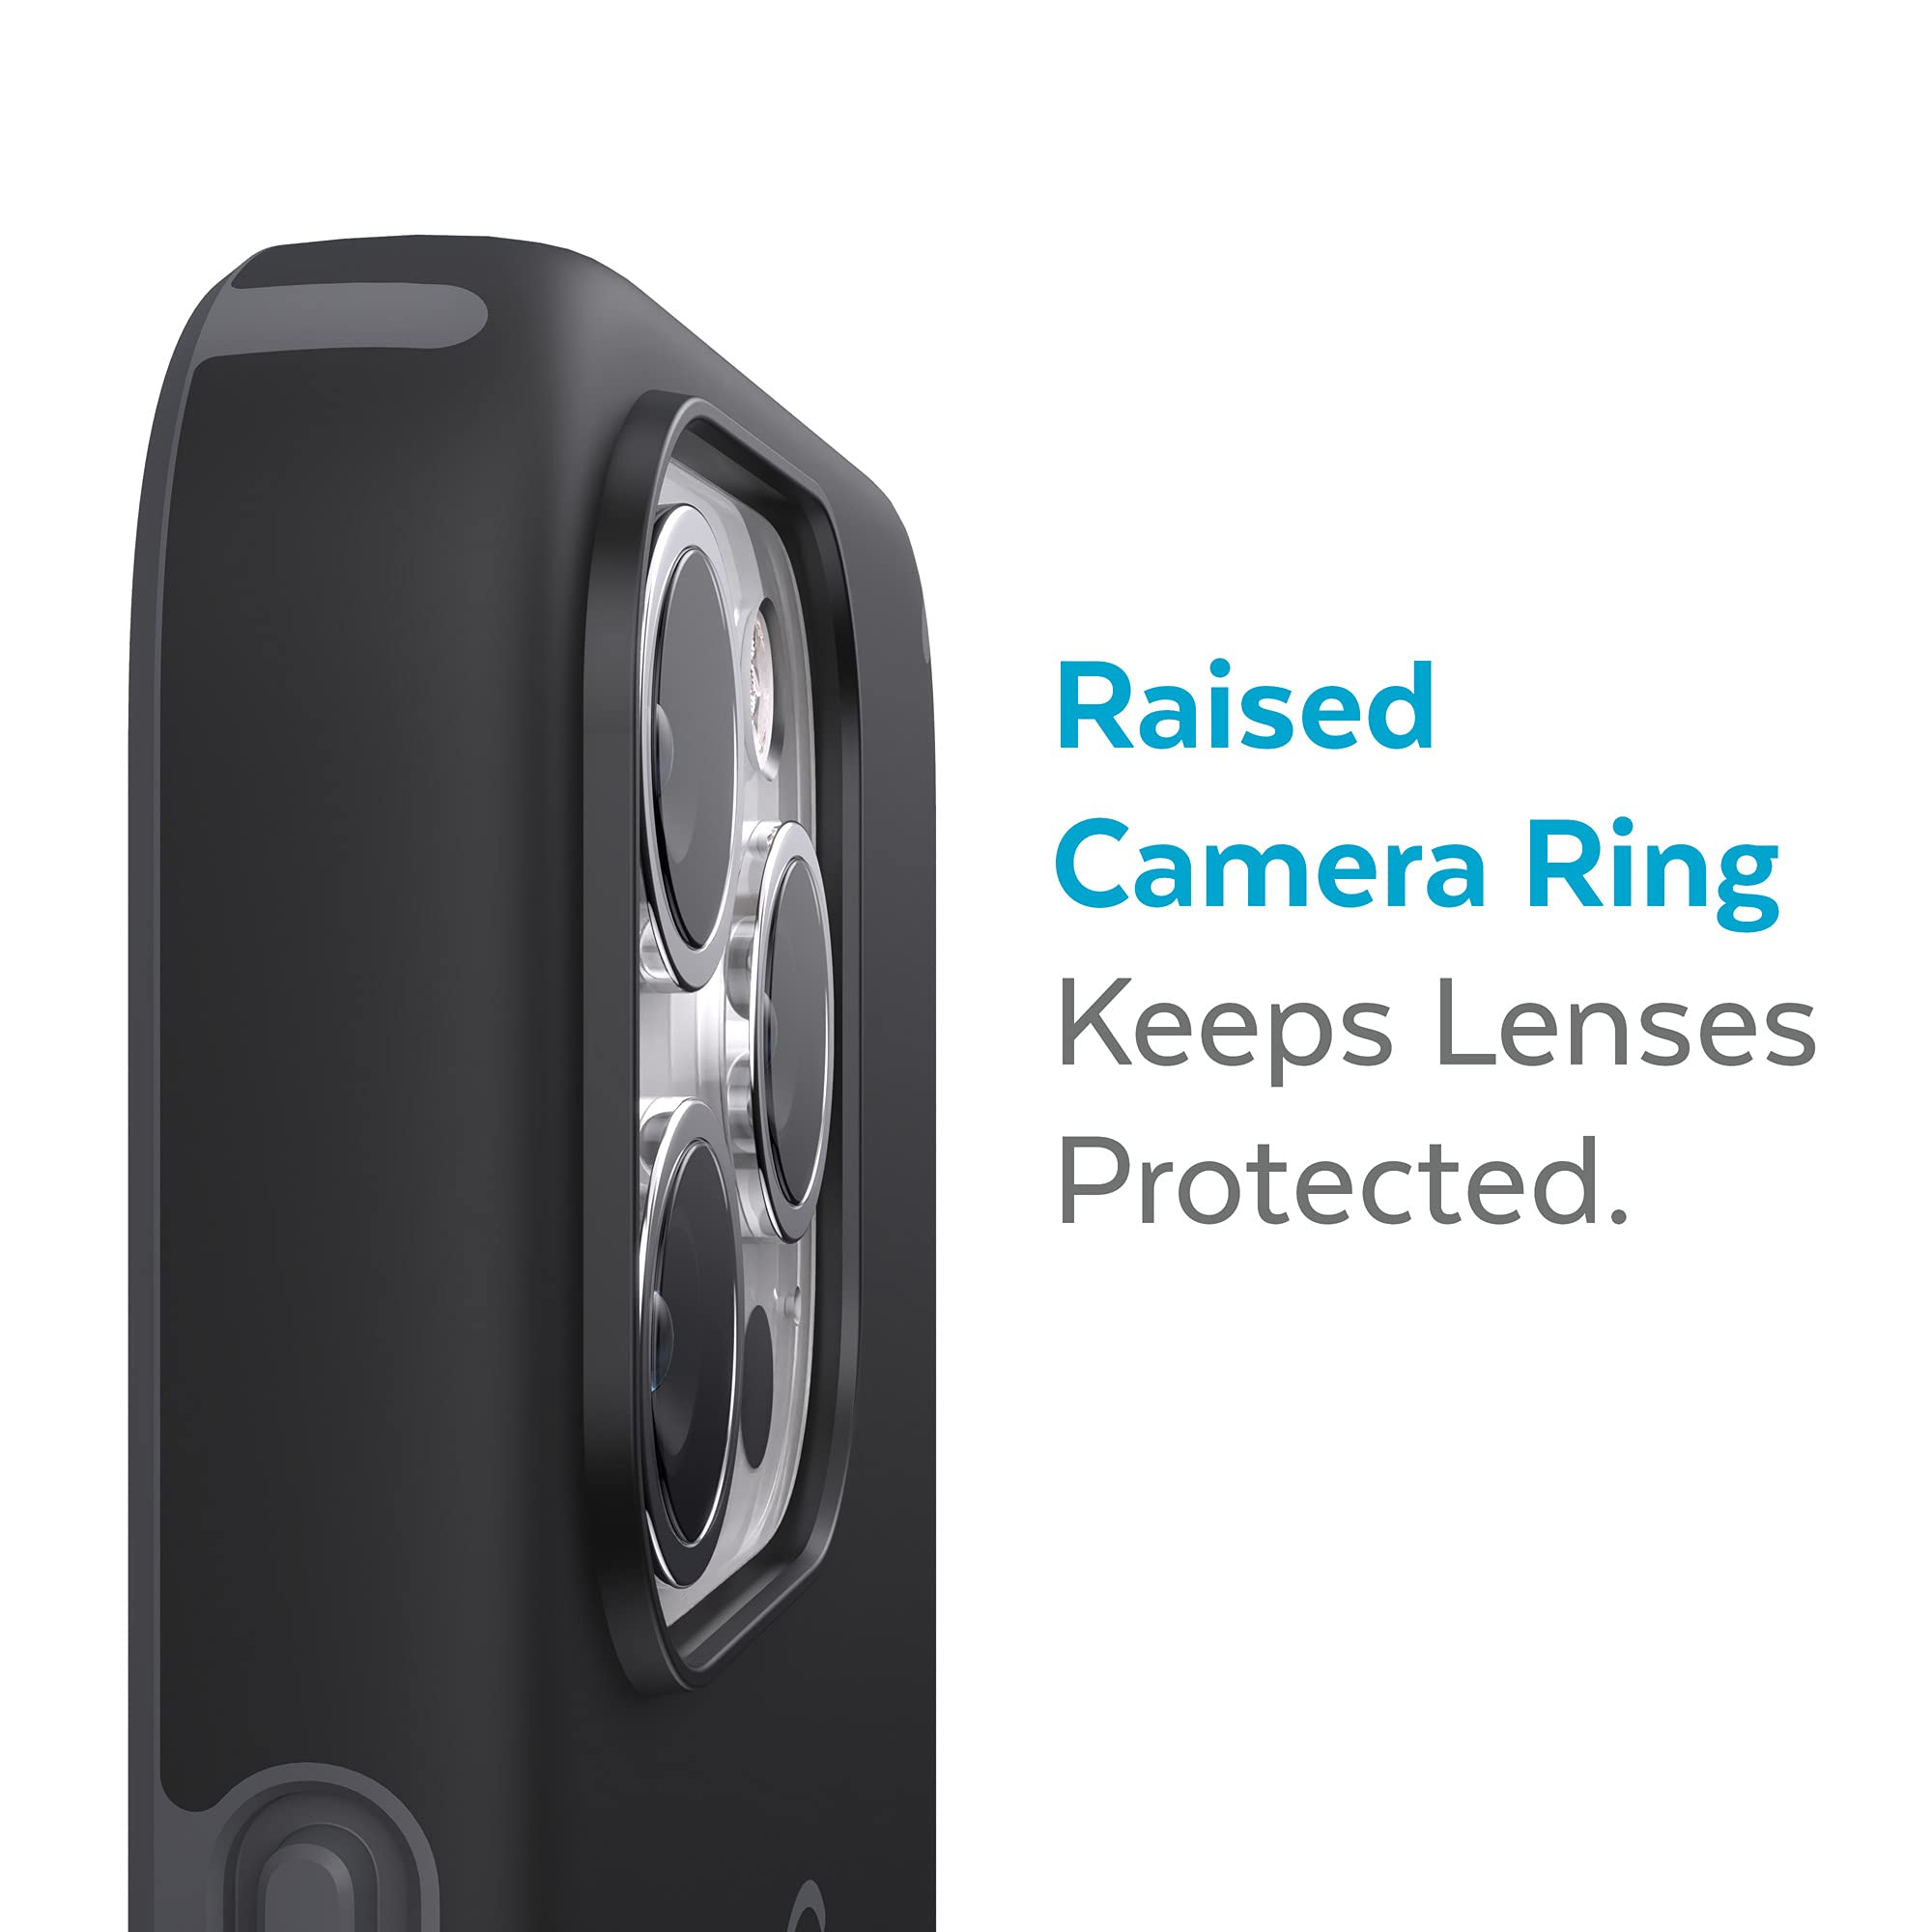 Speck iPhone 13 Pro Max Case- Drop Protection Fits iPhone 12 Pro Max & iPhone 13 Pro Max Cases - Scratch Resistant - Slim Design - Black, Slate Grey, CandyShell Pro